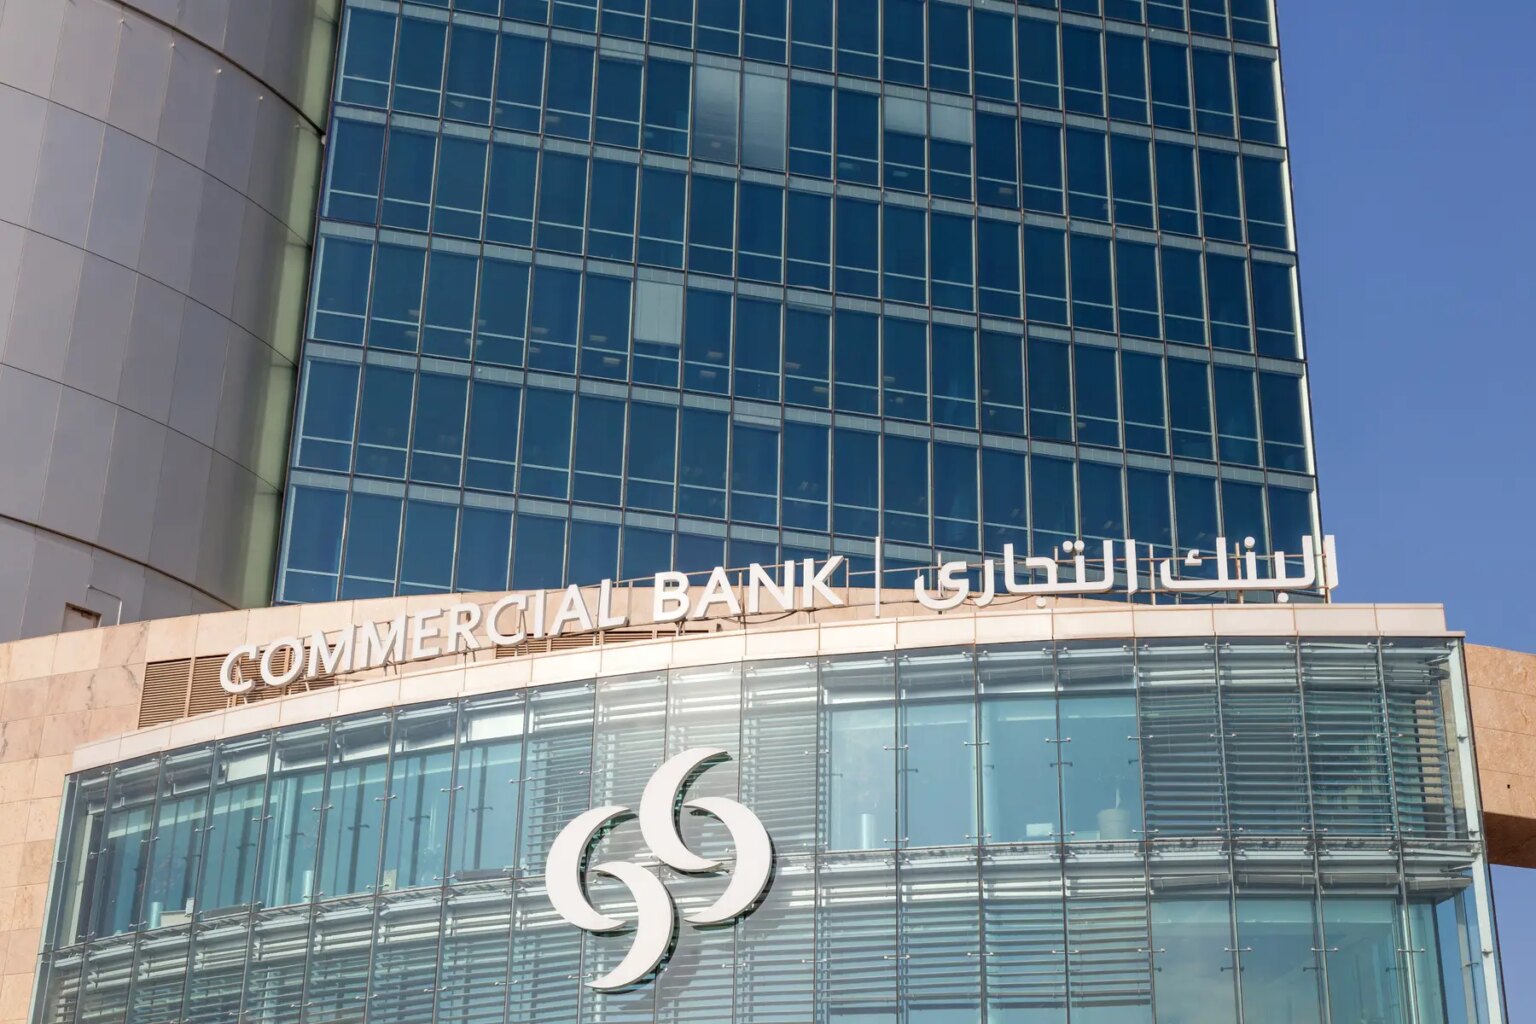 Bank account Qatar